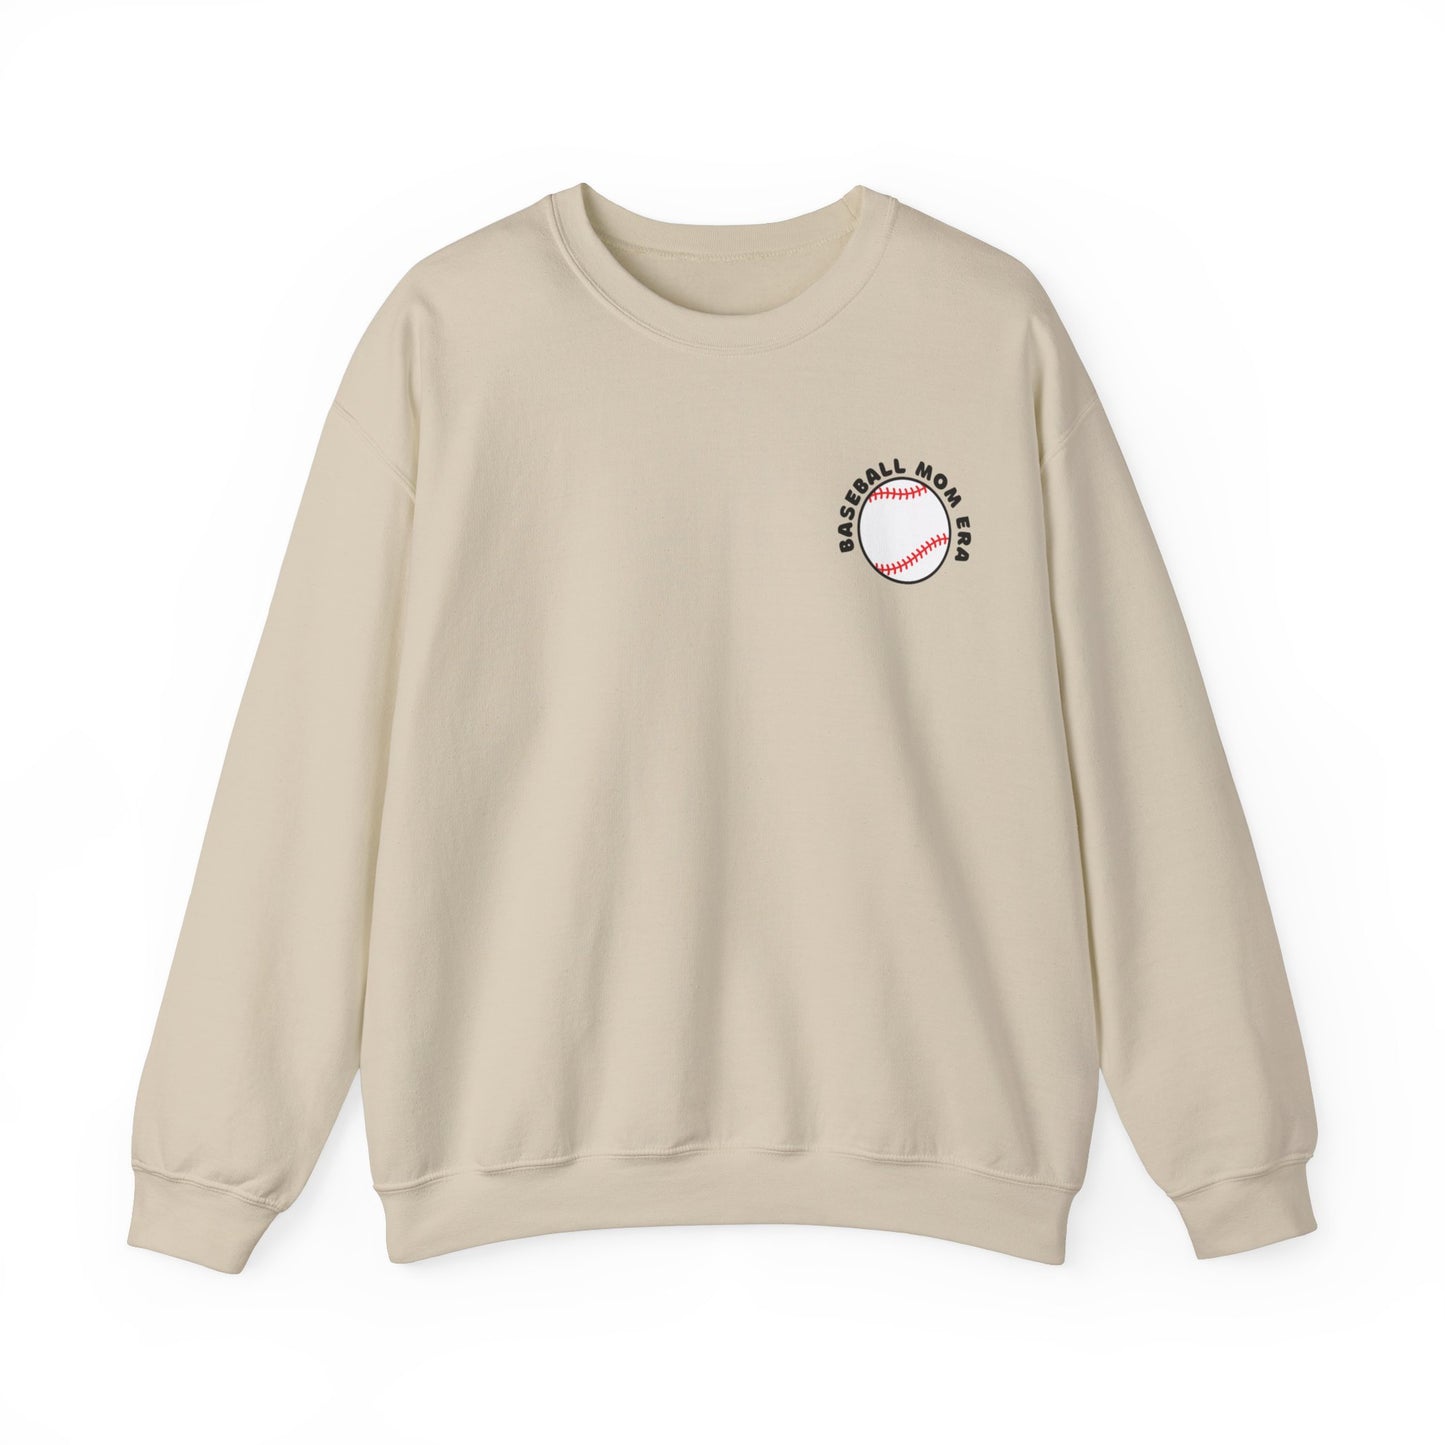 Baseball Mom Era Heavy Blend Crewneck Sweatshirt - Cozy & Durable, Perfect for Game Days